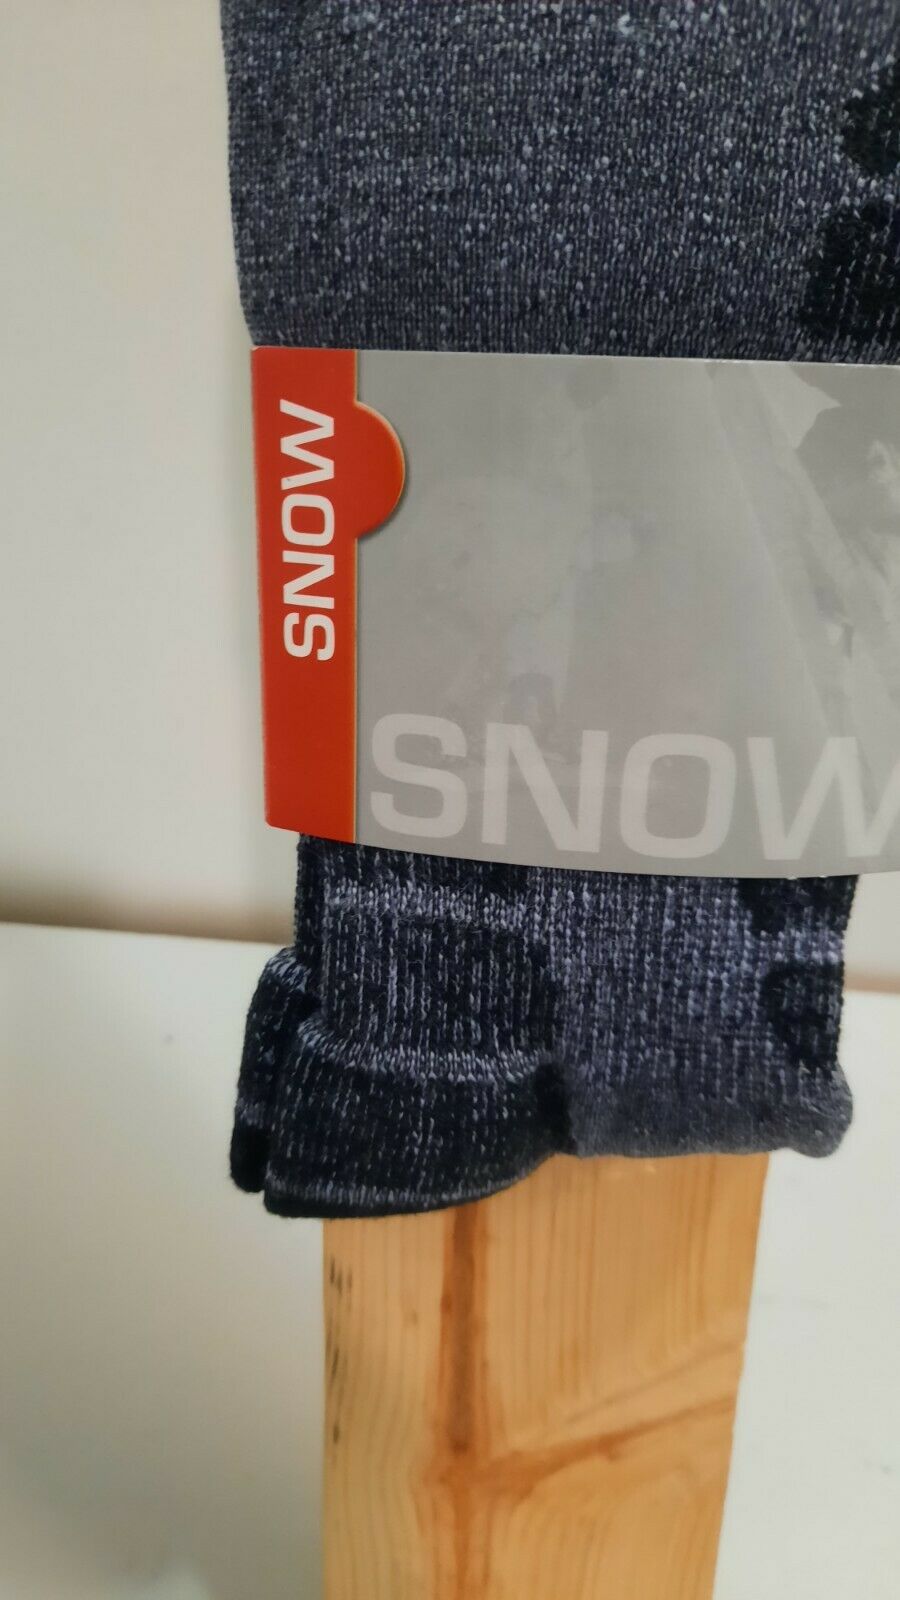 Euro Technically superior snow socks size medium